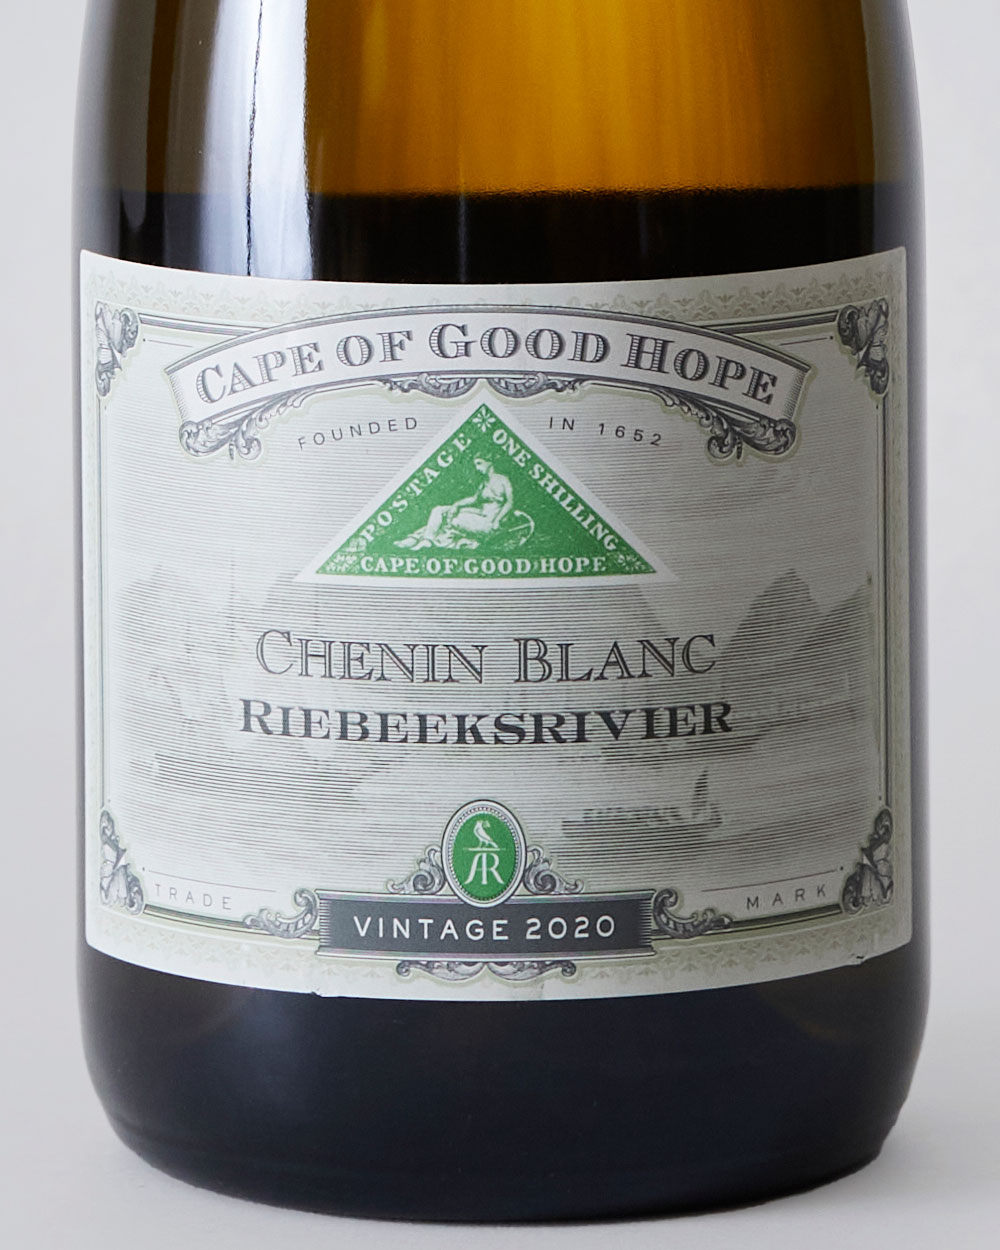 Cape of Good Hope Chenin Blanc Riebeeksrivier label